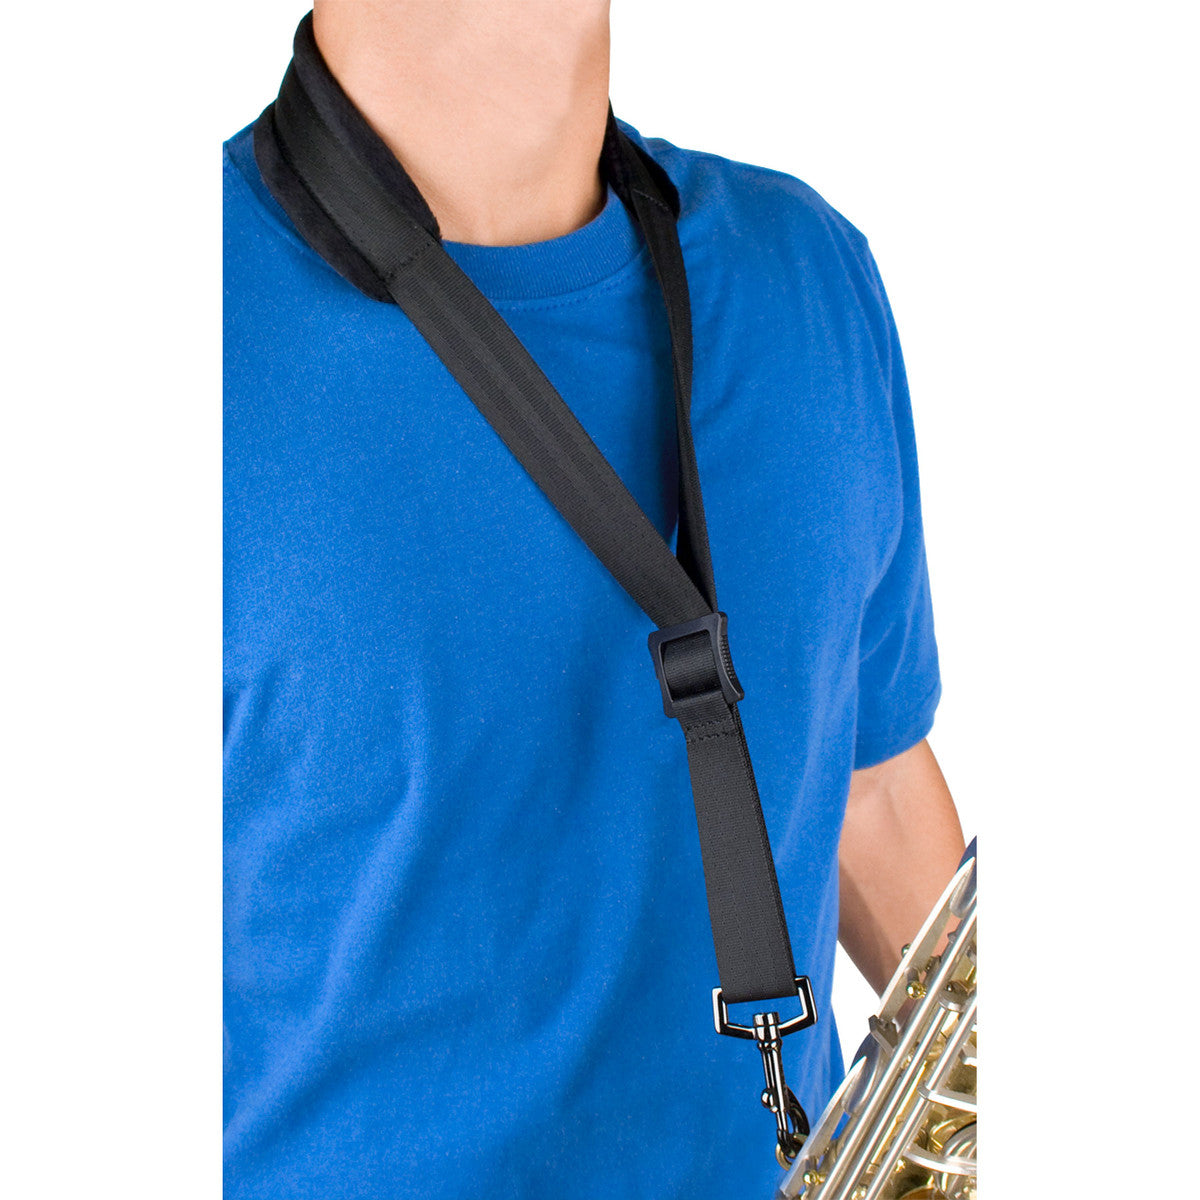 24" Padded Saxophone Neck Strap - Black